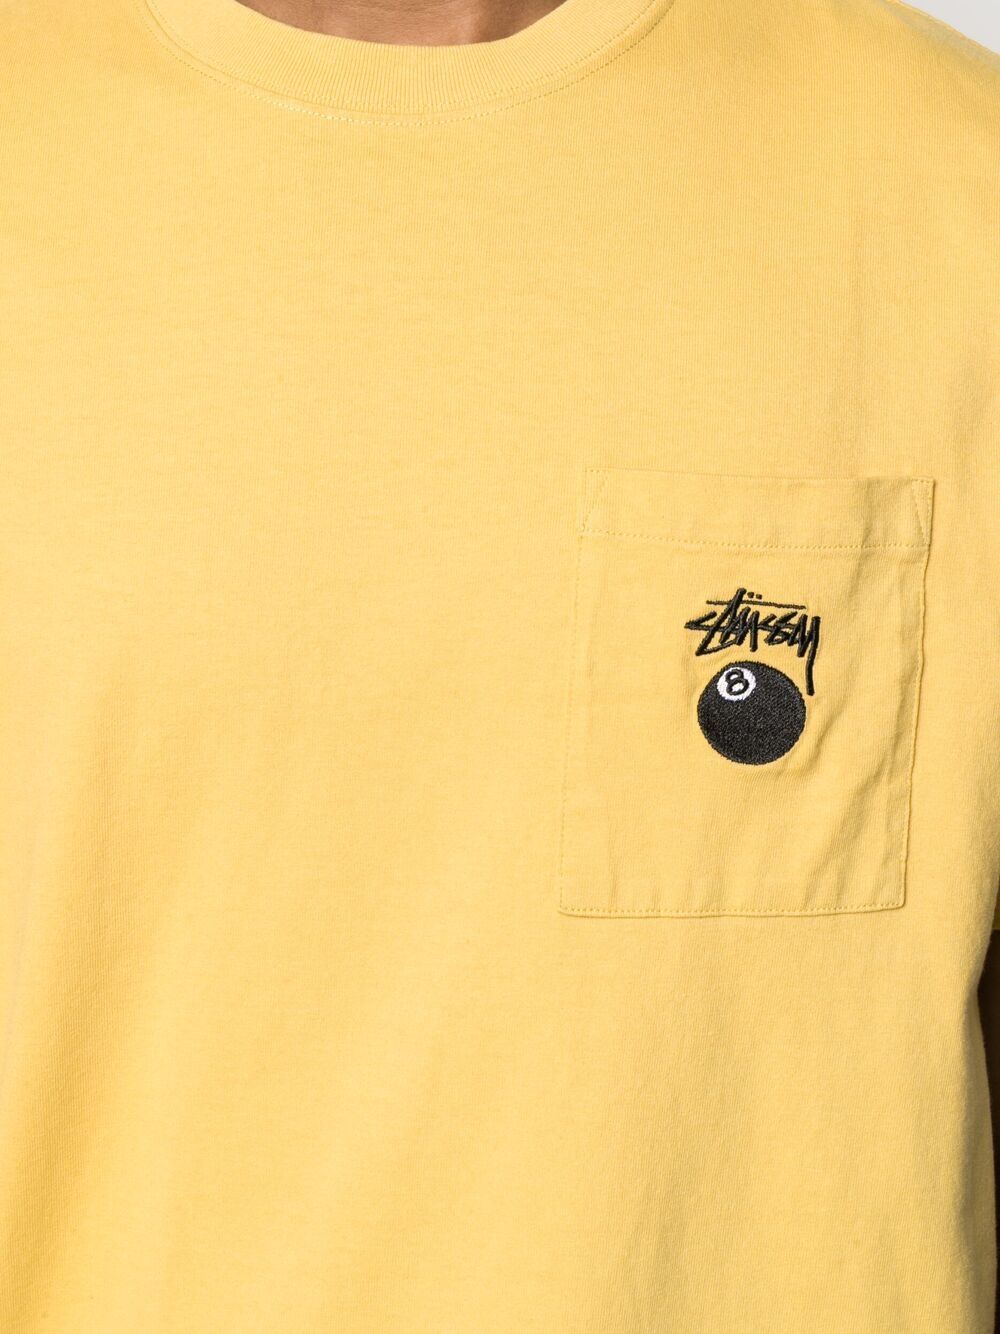 фото Stussy футболка 8 ball с карманом